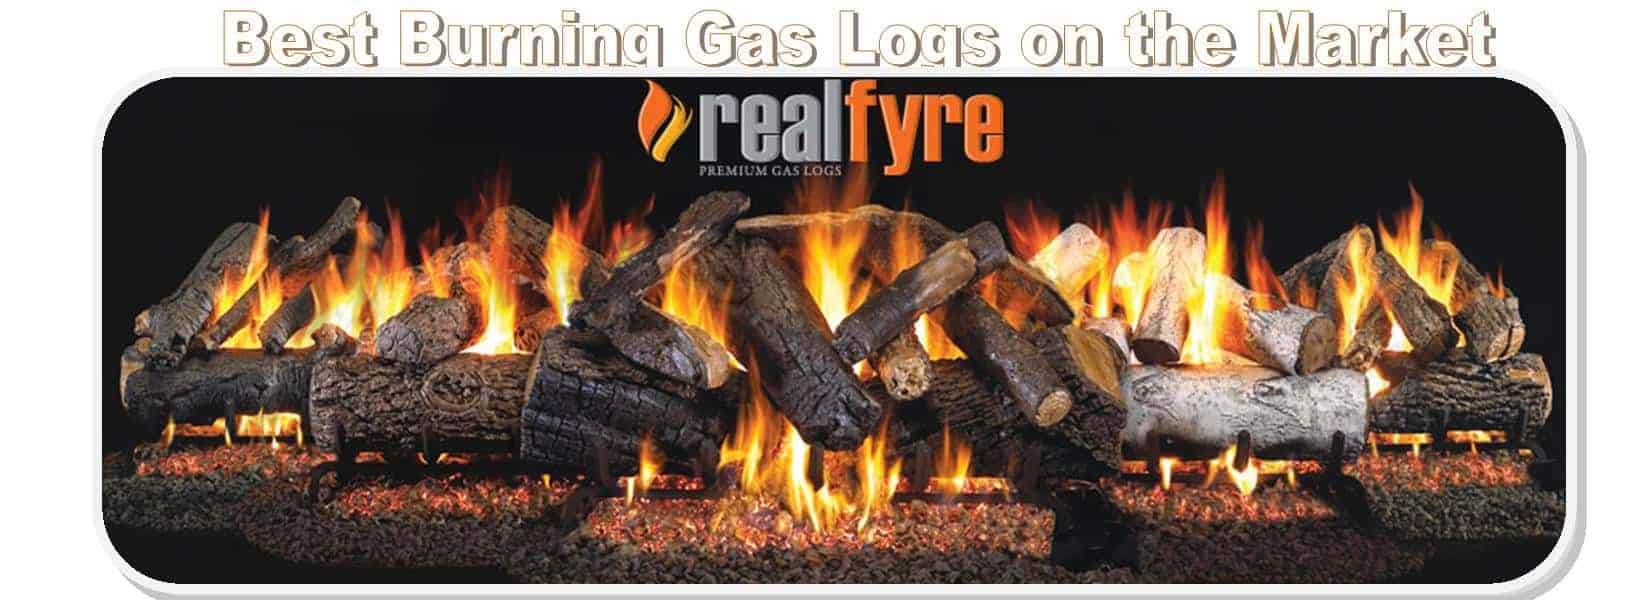 R.H. Peterson Gas Logs Burning